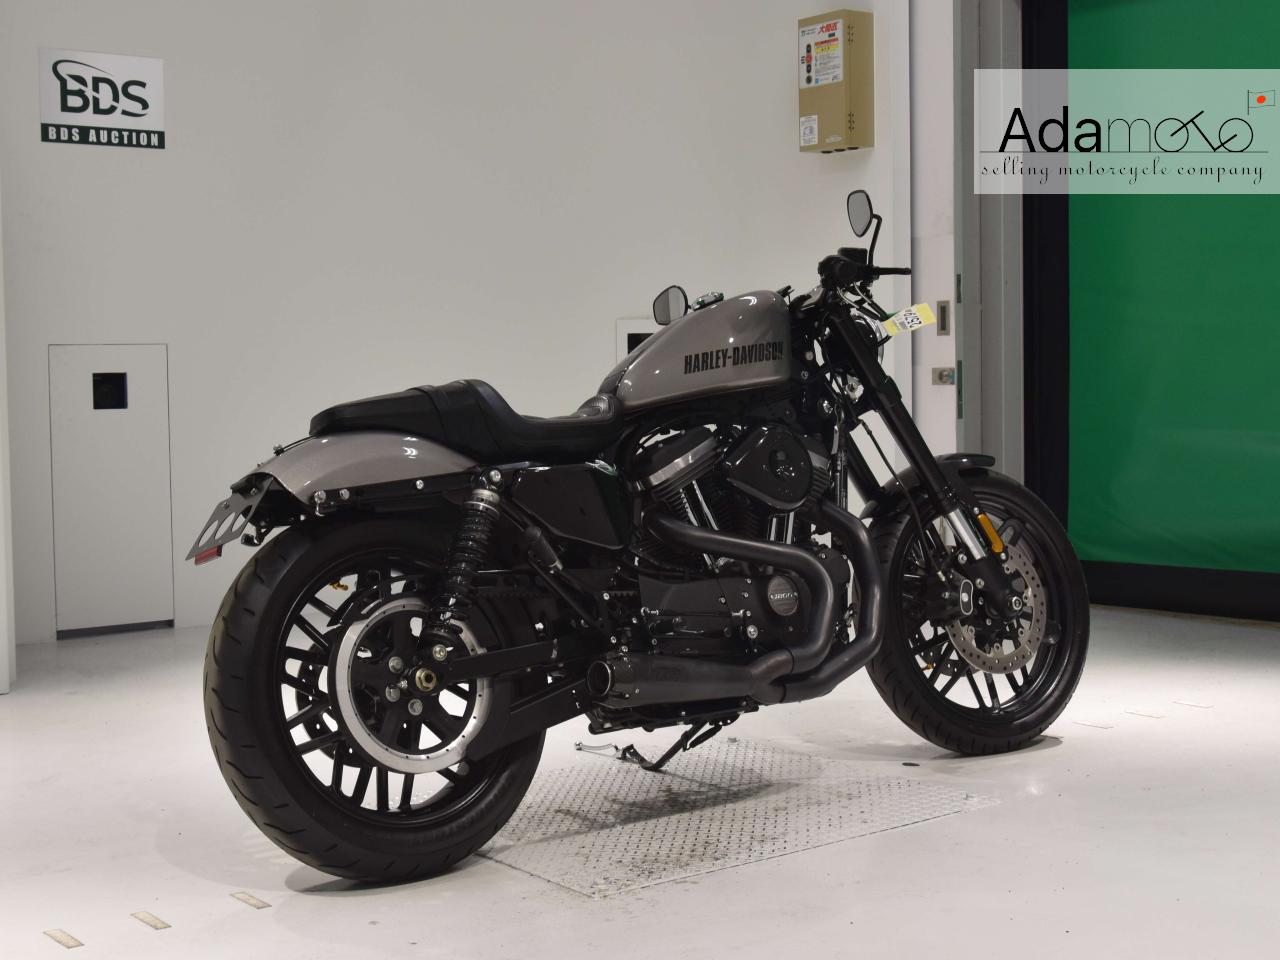 Harley Davidson XL1200CX - Adamoto - Motorcycles from Japan